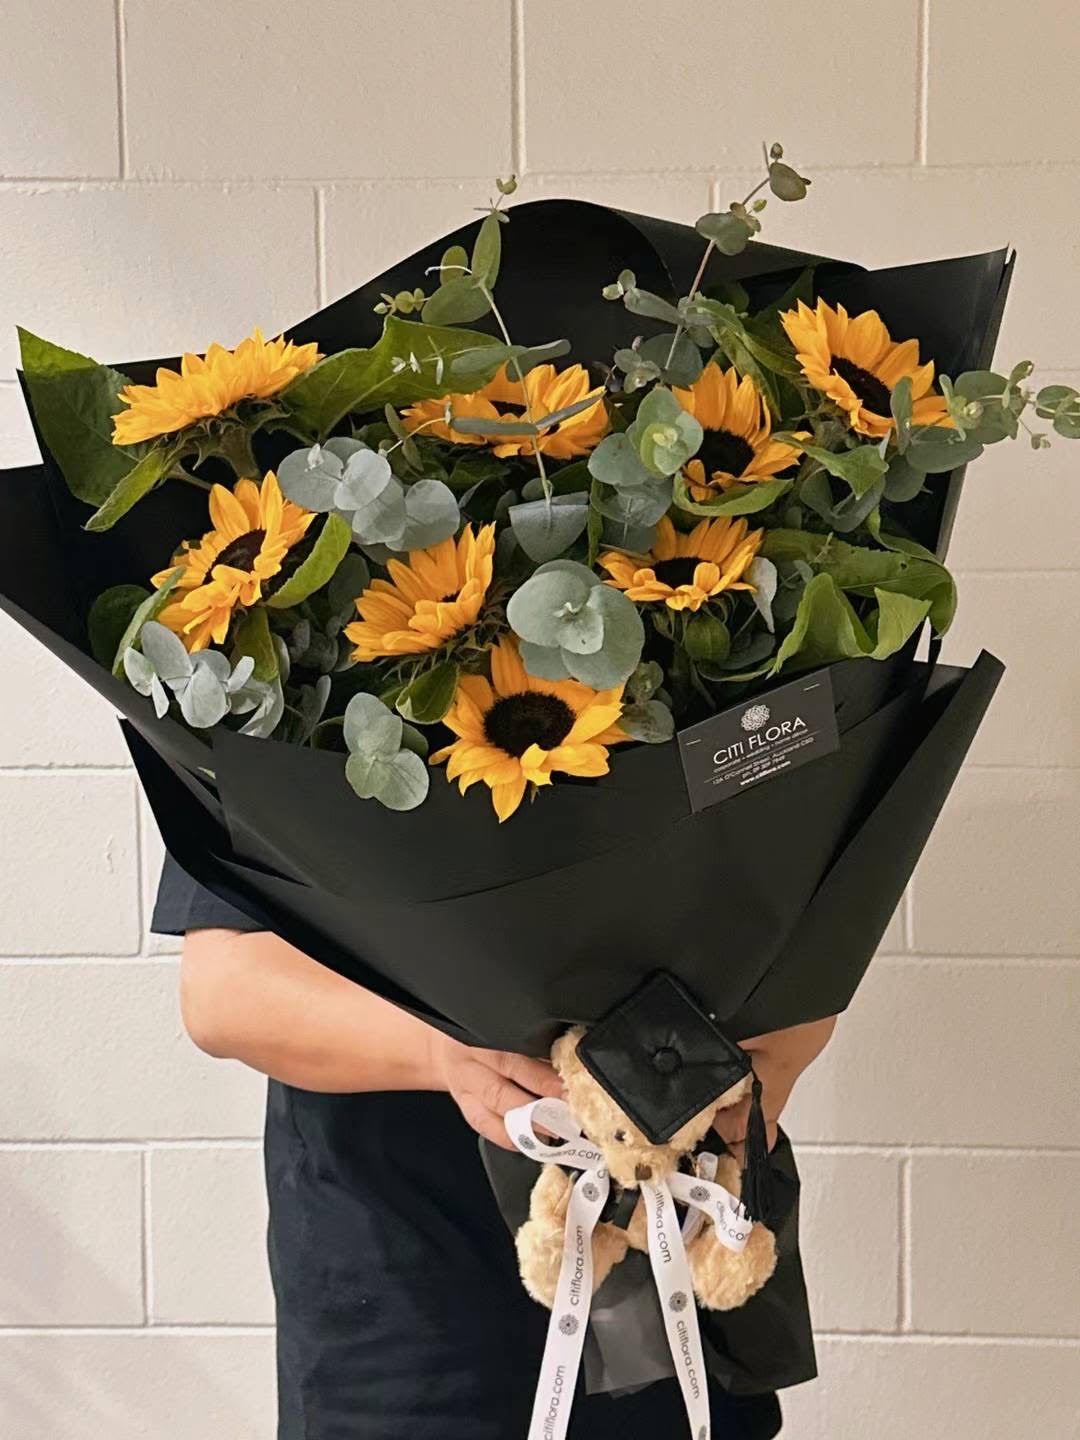 (JB7) Simply Sunflowers